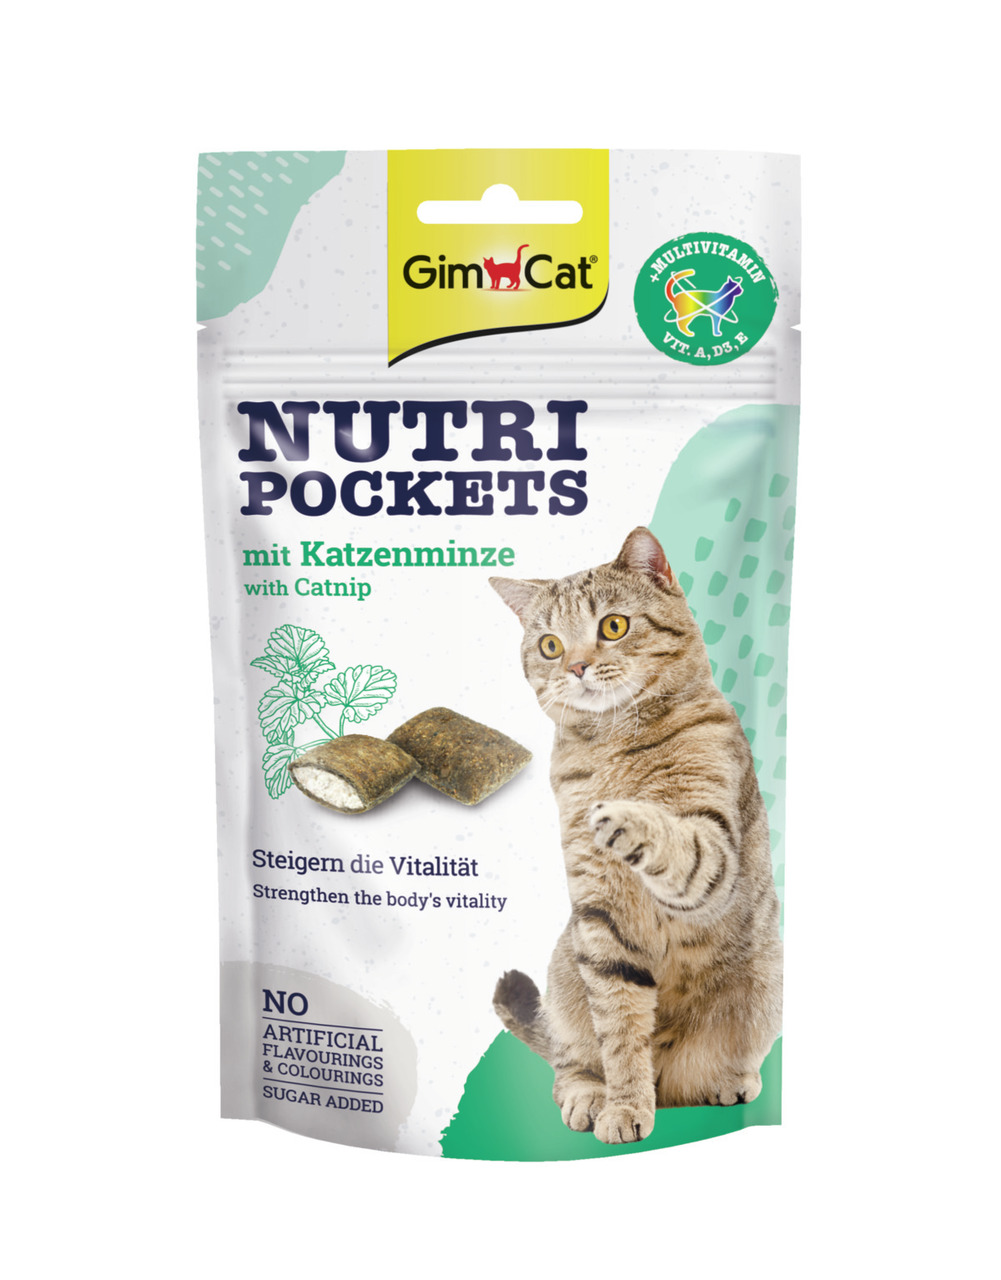 GimCat Nutri Pockets mit Katzenminze & Multivitamin Katzen Snack 60 g